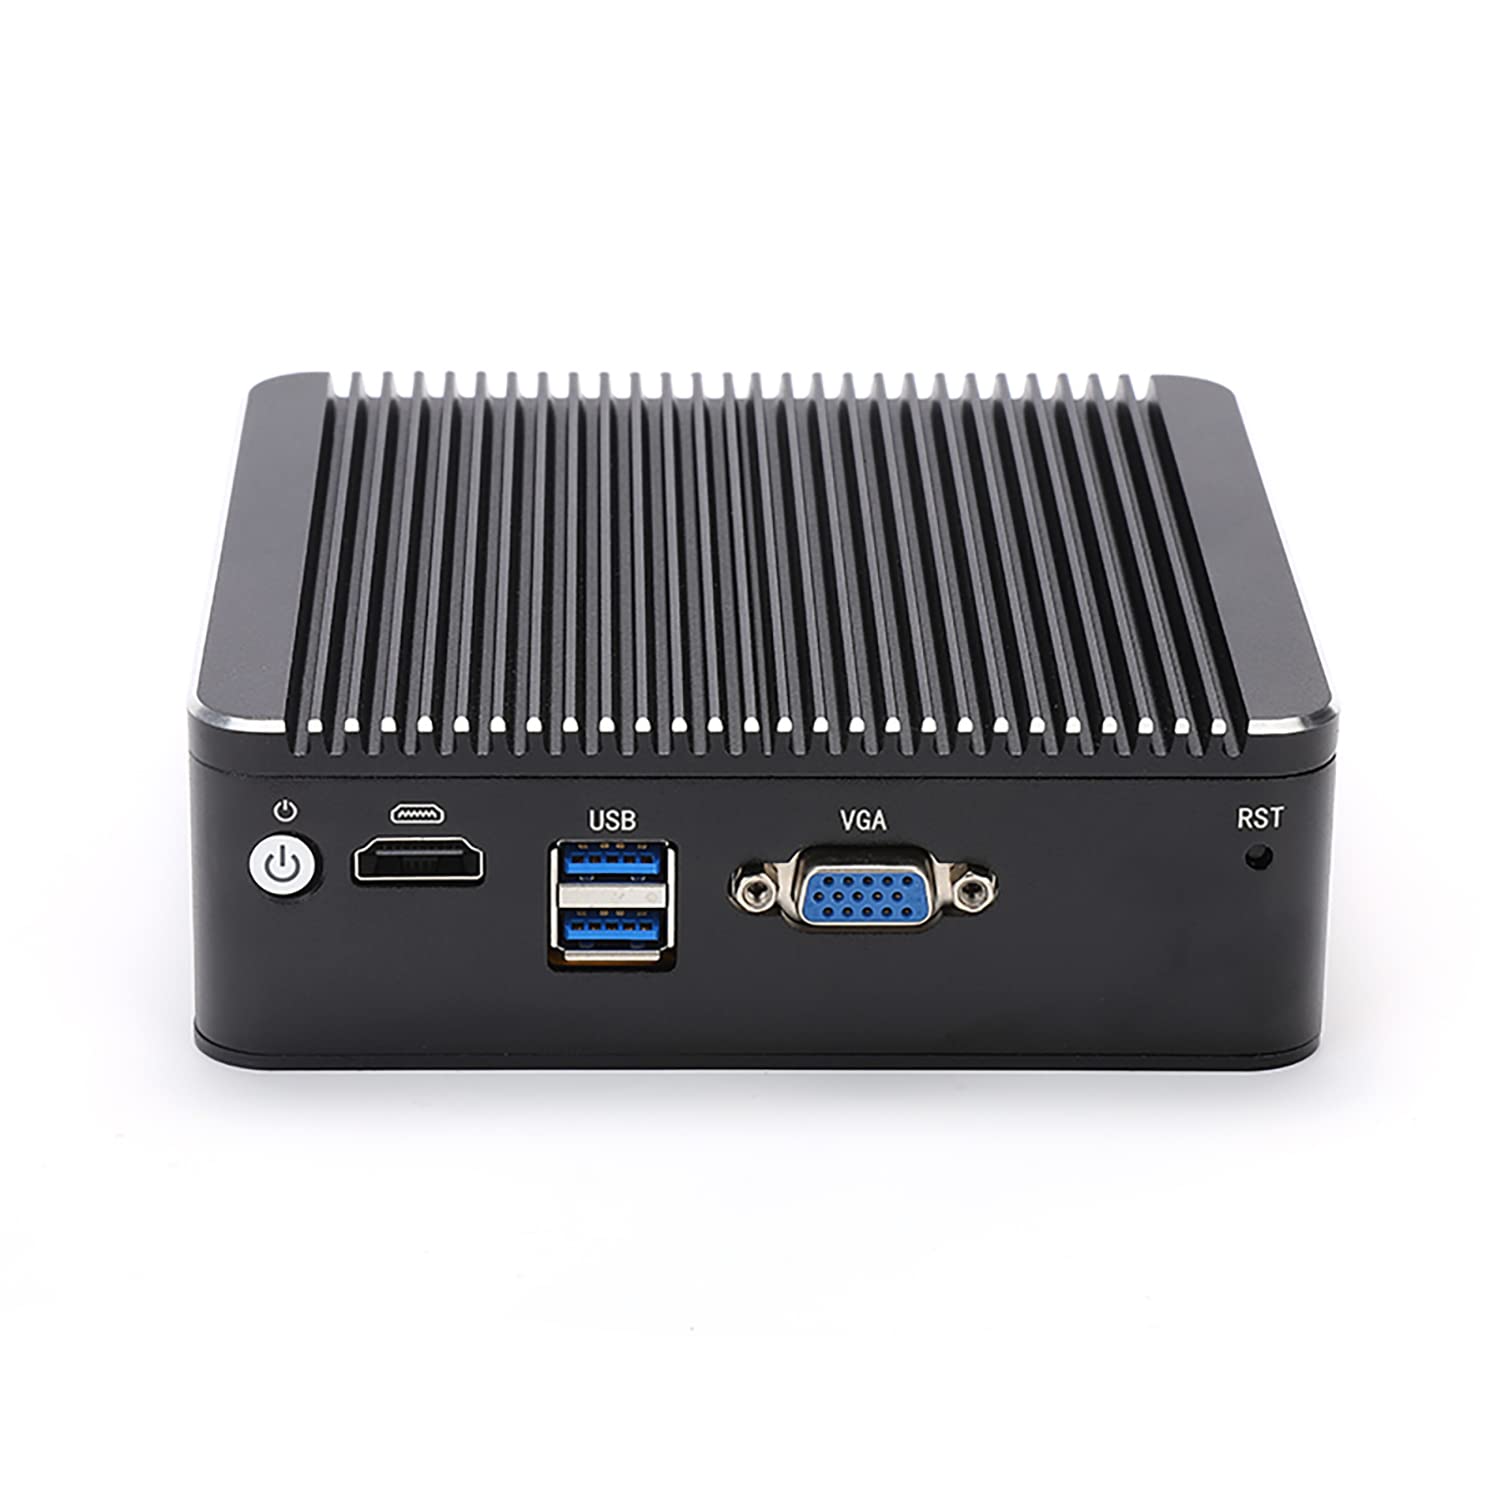 HUNSN Micro Firewall Appliance, OPNsense, VPN, Router PC, Intel Celeron J4125, RS34g, AES-NI, 4 x Intel 2.5GbE I225-V LAN, 2 x USB3.0, VGA, HDMI, Fanless, 16G RAM, 64G SSD